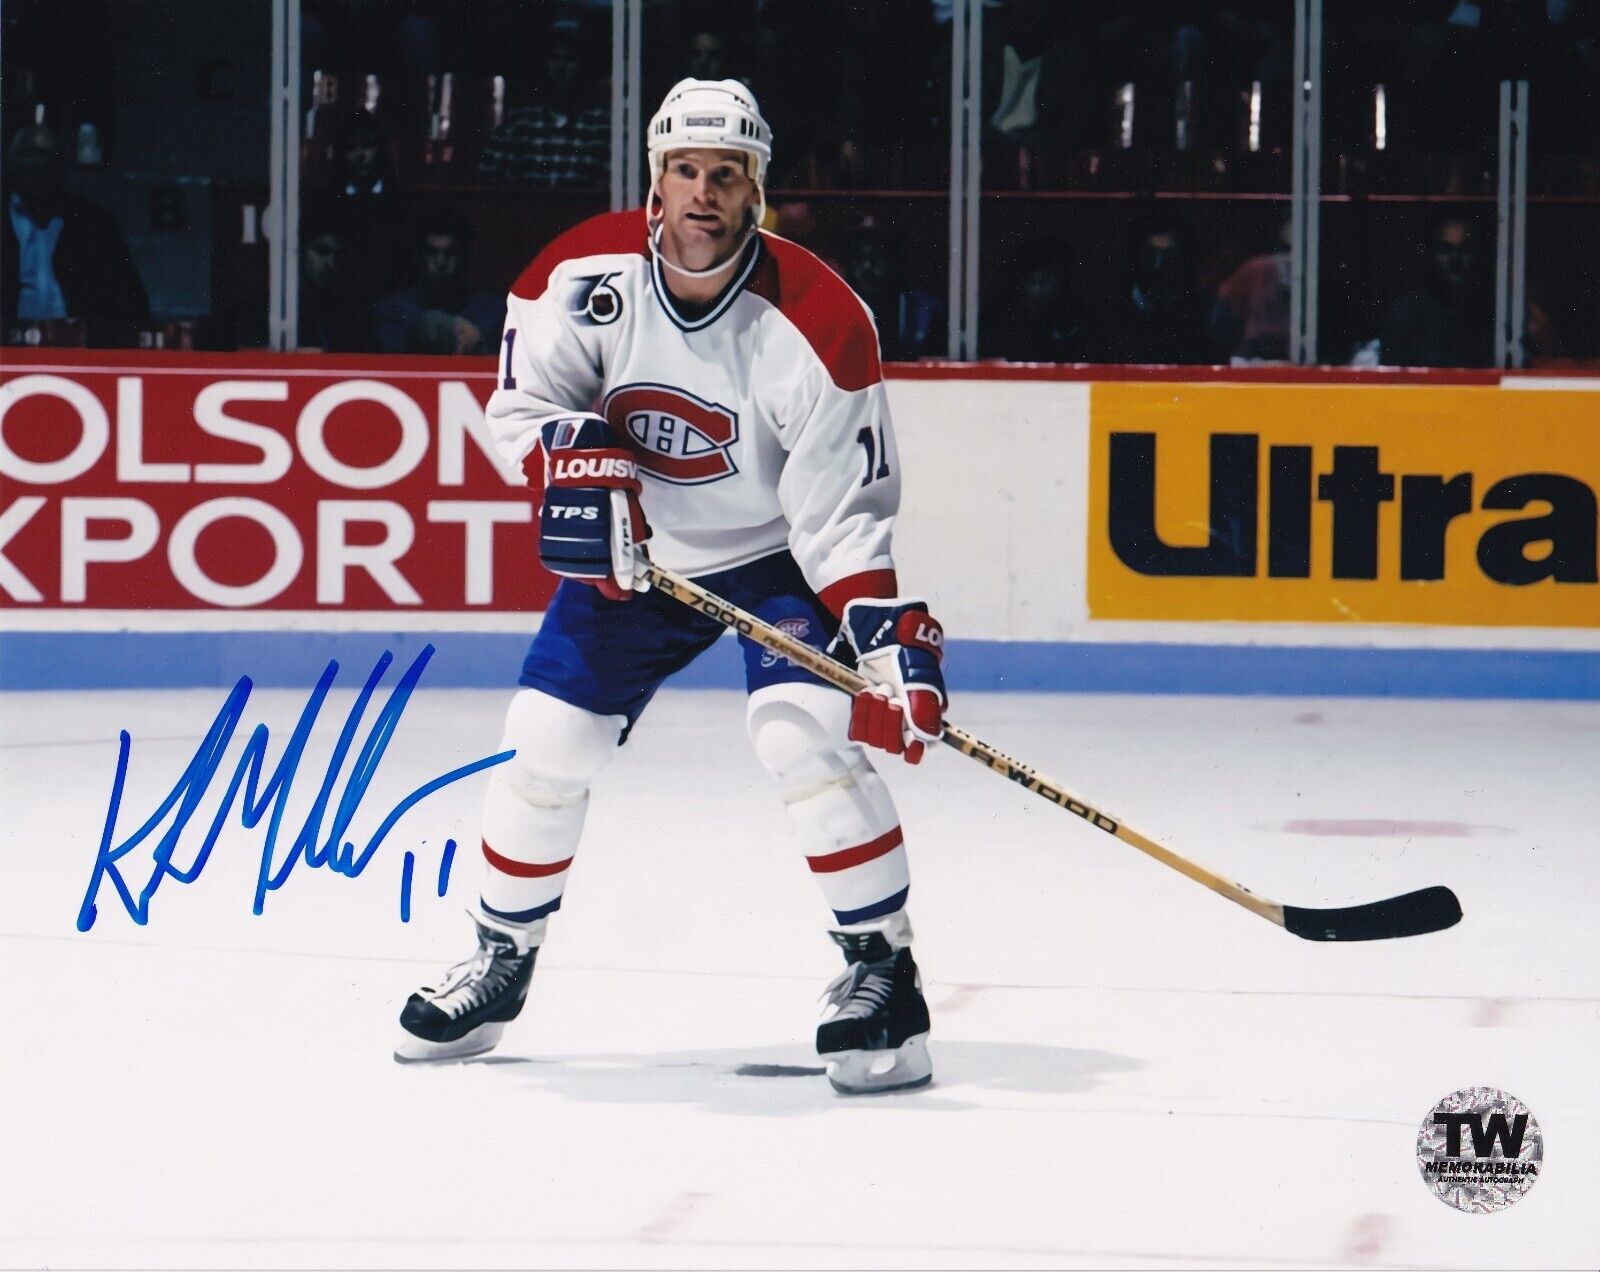 KIRK MULLER Autographed Photo (8 x 10) - Montreal Canadiens - TW PRESTIGE